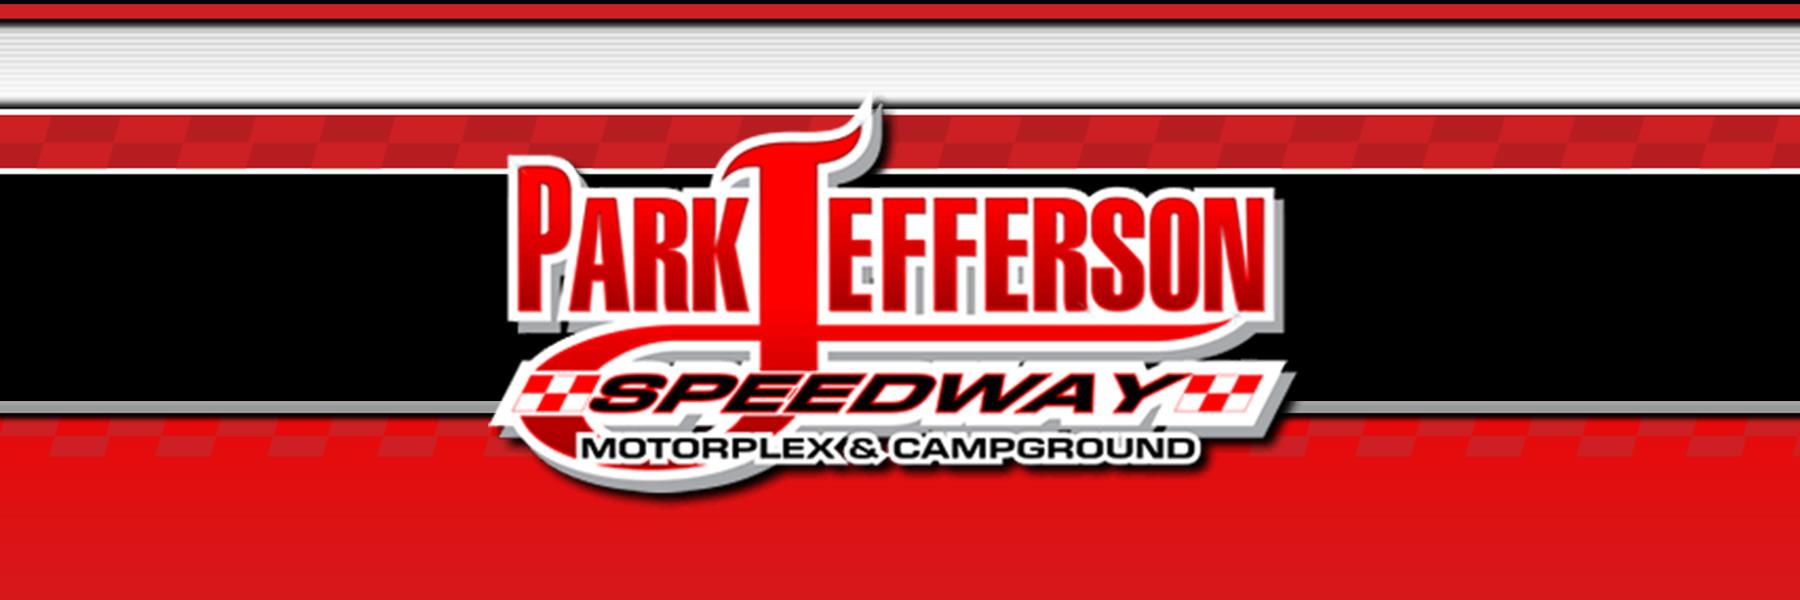 8/20/2022 - Park Jefferson International Speedway